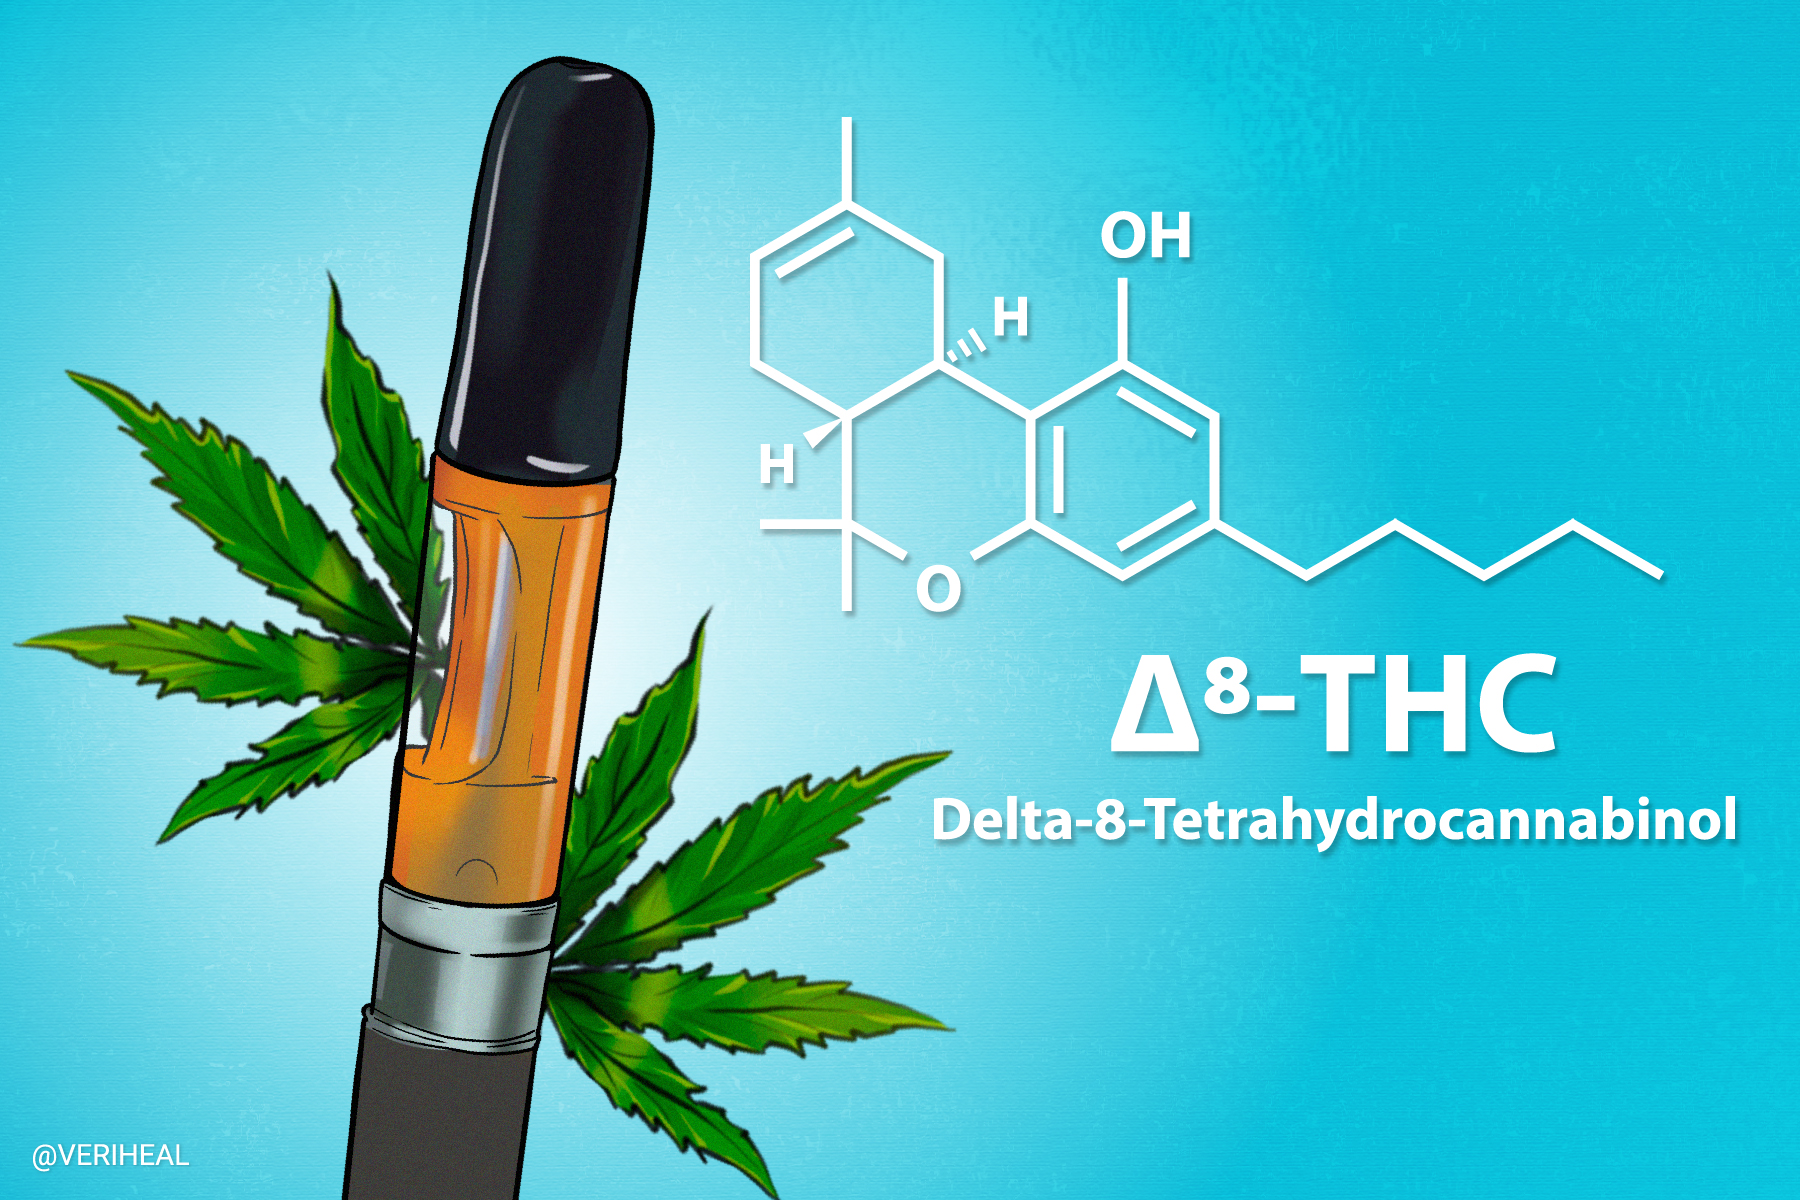 CHILL EXTREME DELTA-8 GUMMIES DRUG TEST - Gummies|Thc|Products|Hemp|Product|Brand|Effects|Delta|Gummy|Cbd|Origin|Quality|Dosage|Delta-8|Dose|Usasource|Flavors|Brands|Ingredients|Range|Customers|Edibles|Cartridges|Reviews|Side|List|Health|Cannabis|Lab|Customer|Options|Benefits|Overviewproducts|Research|Time|Market|Drug|Farms|Party|People|Delta-8 Thc|Delta-8 Products|Delta-9 Thc|Delta-8 Gummies|Delta-8 Thc Products|Delta-8 Brands|Customer Reviews|Brand Overviewproducts|Drug Tests|Free Shipping|Similar Benefits|Vape Cartridges|Hemp Doctor|United States|Third Party Lab|Drug Test|Thc Edibles|Health Canada|Cannabis Plant|Side Effects|Organic Hemp|Diamond Cbd|Reaction Time|Legal Hemp|Psychoactive Effects|Psychoactive Properties|Third Party|Dry Eyes|Delta-8 Market|Tolerance Level